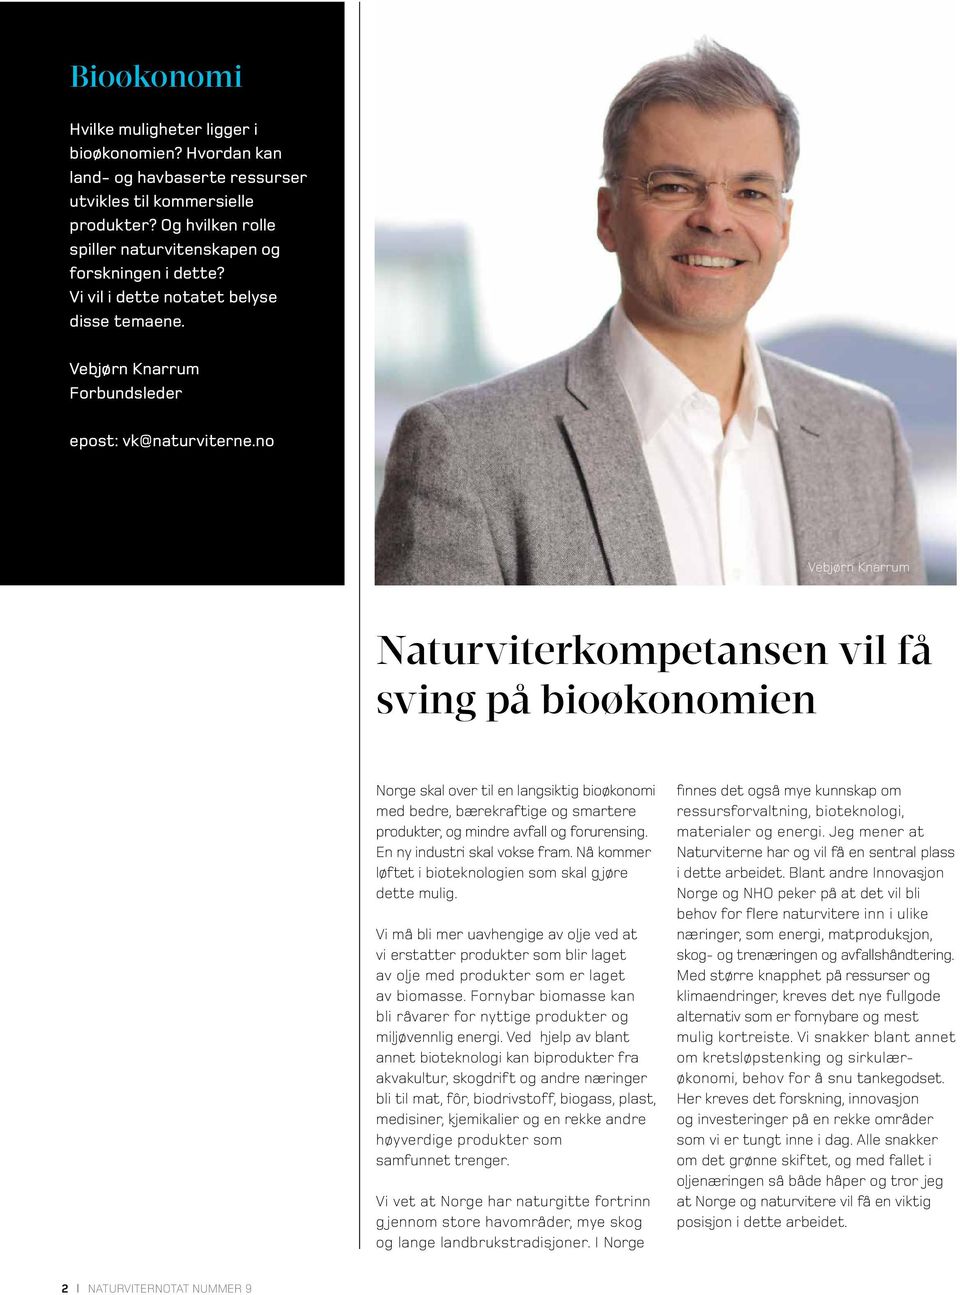 no Vebjørn Knarrum Naturviterkompetansen vil få sving på bioøkonomien Norge skal over til en langsiktig bioøkonomi med bedre, bærekraftige og smartere produkter, og mindre avfall og forurensing.